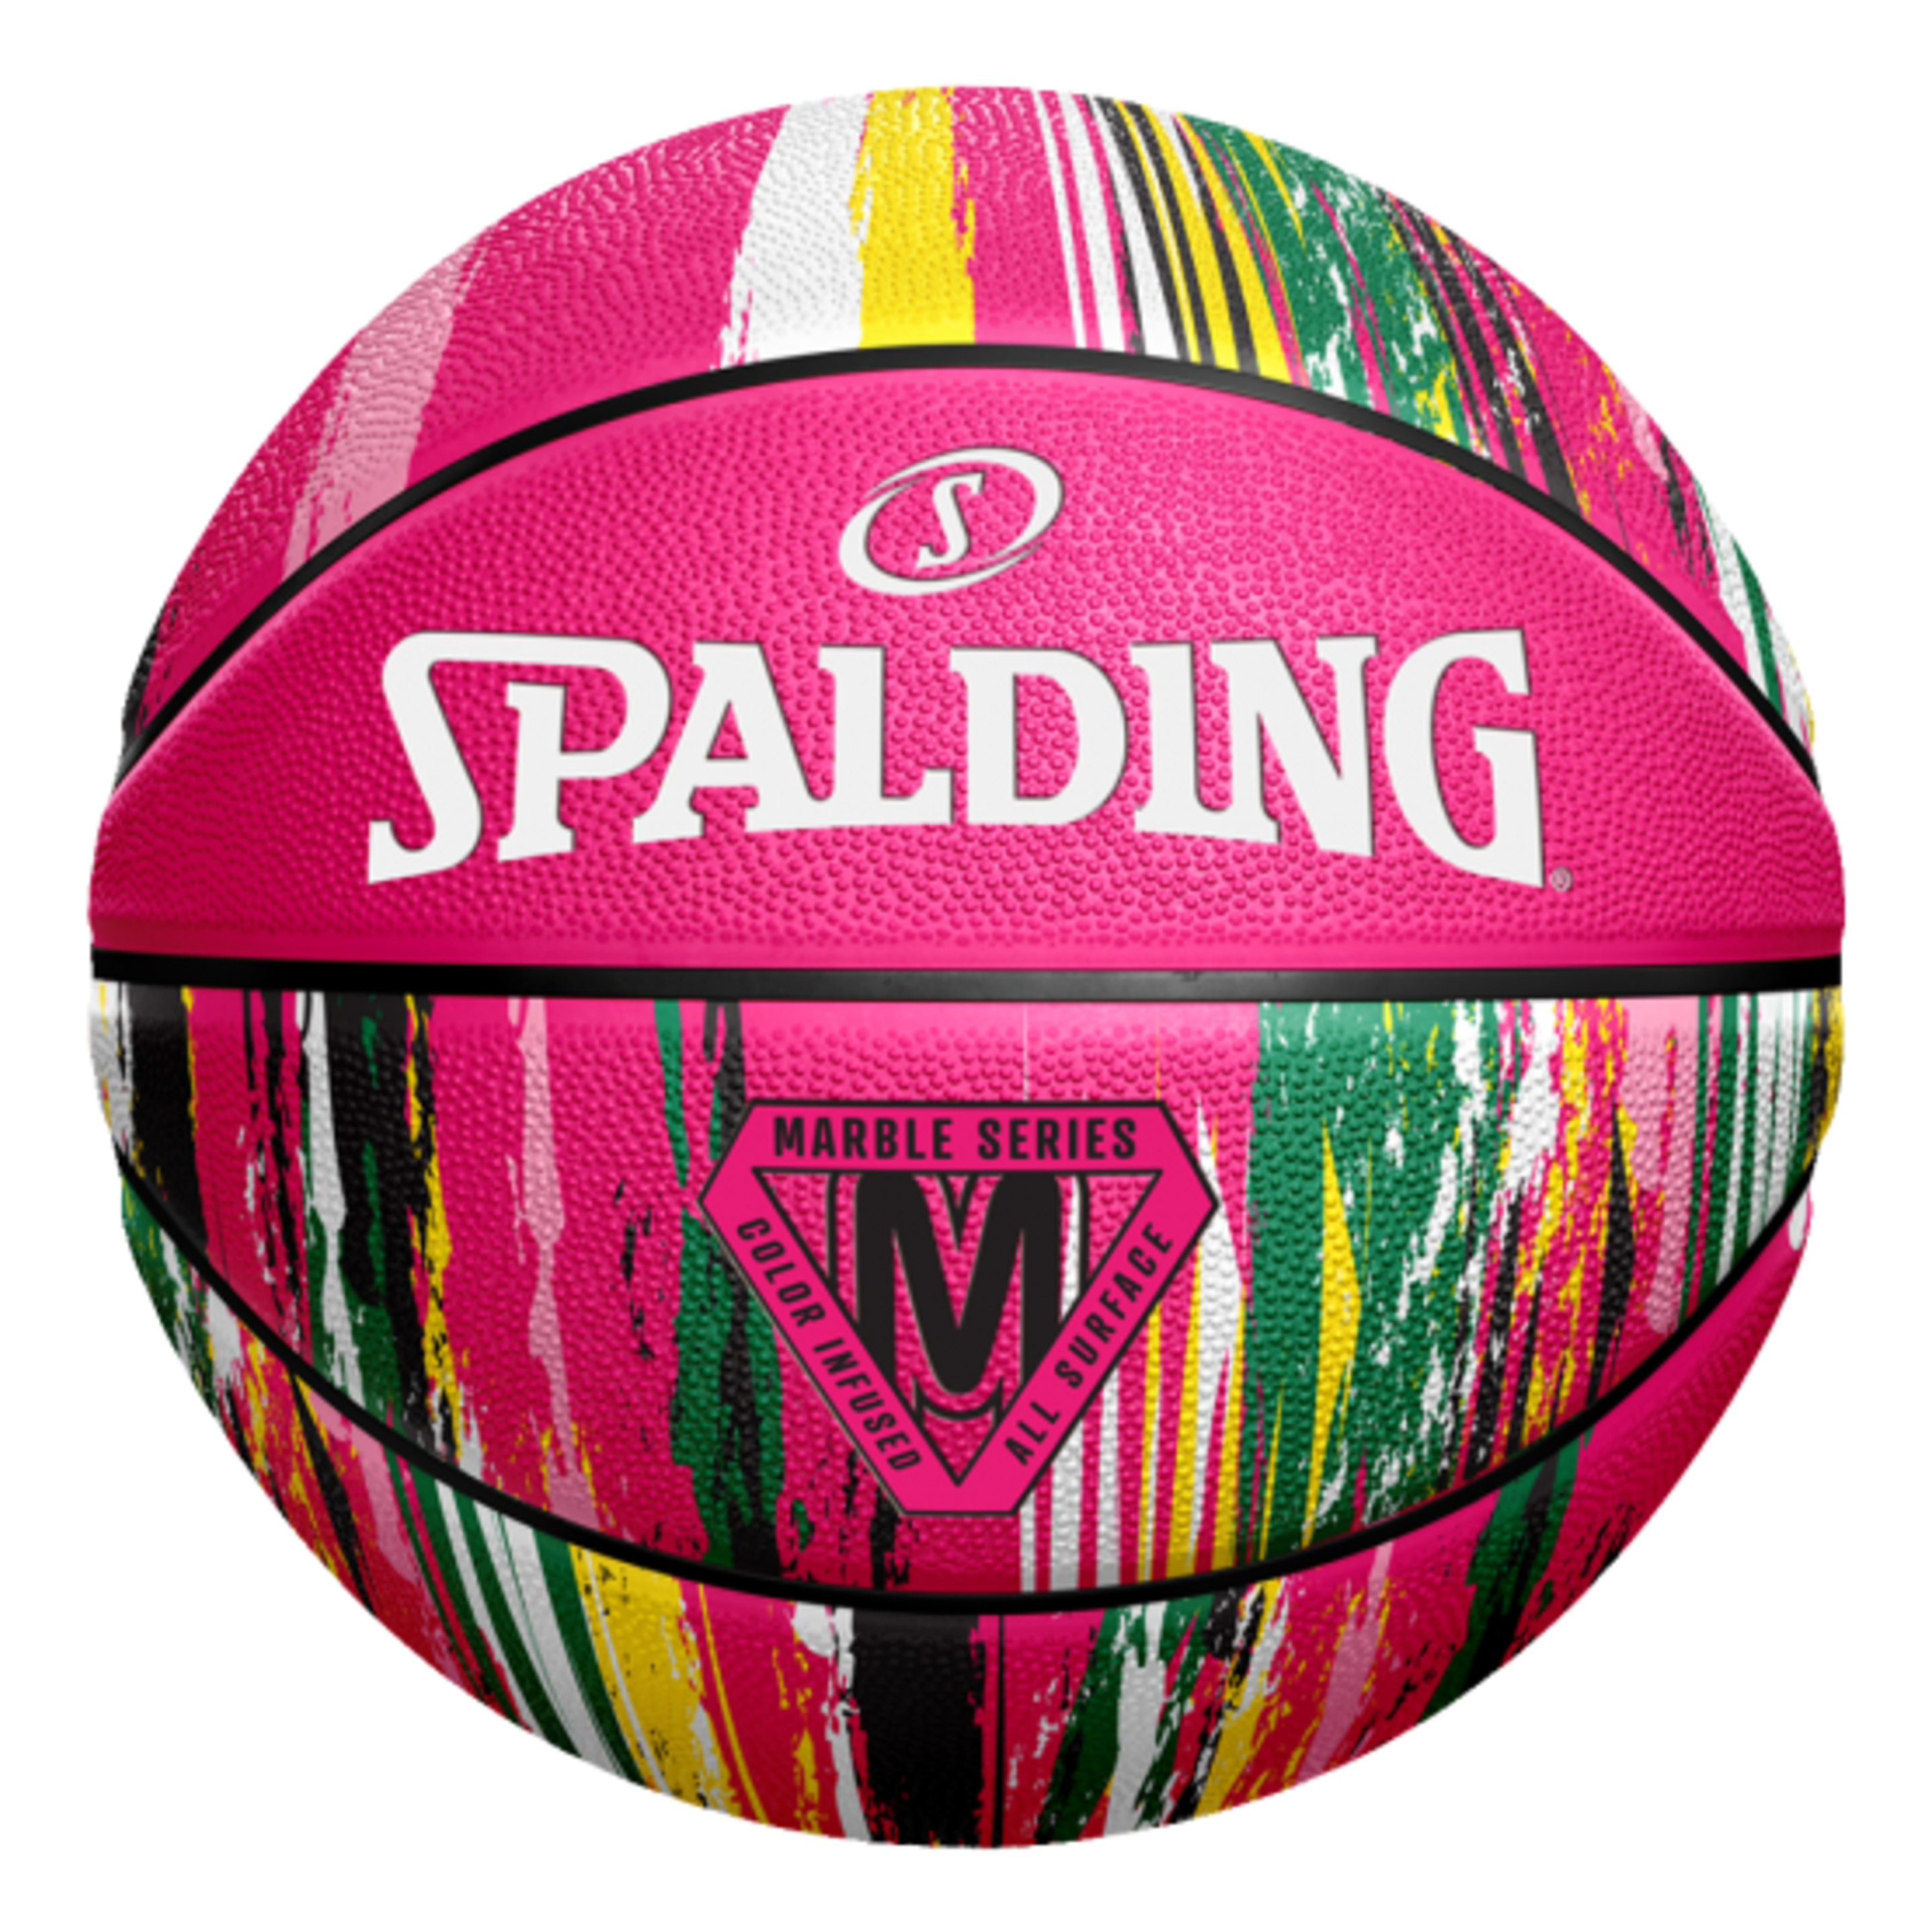 Basquete Spalding Marble Series Pink Sz6 - fucsia - 